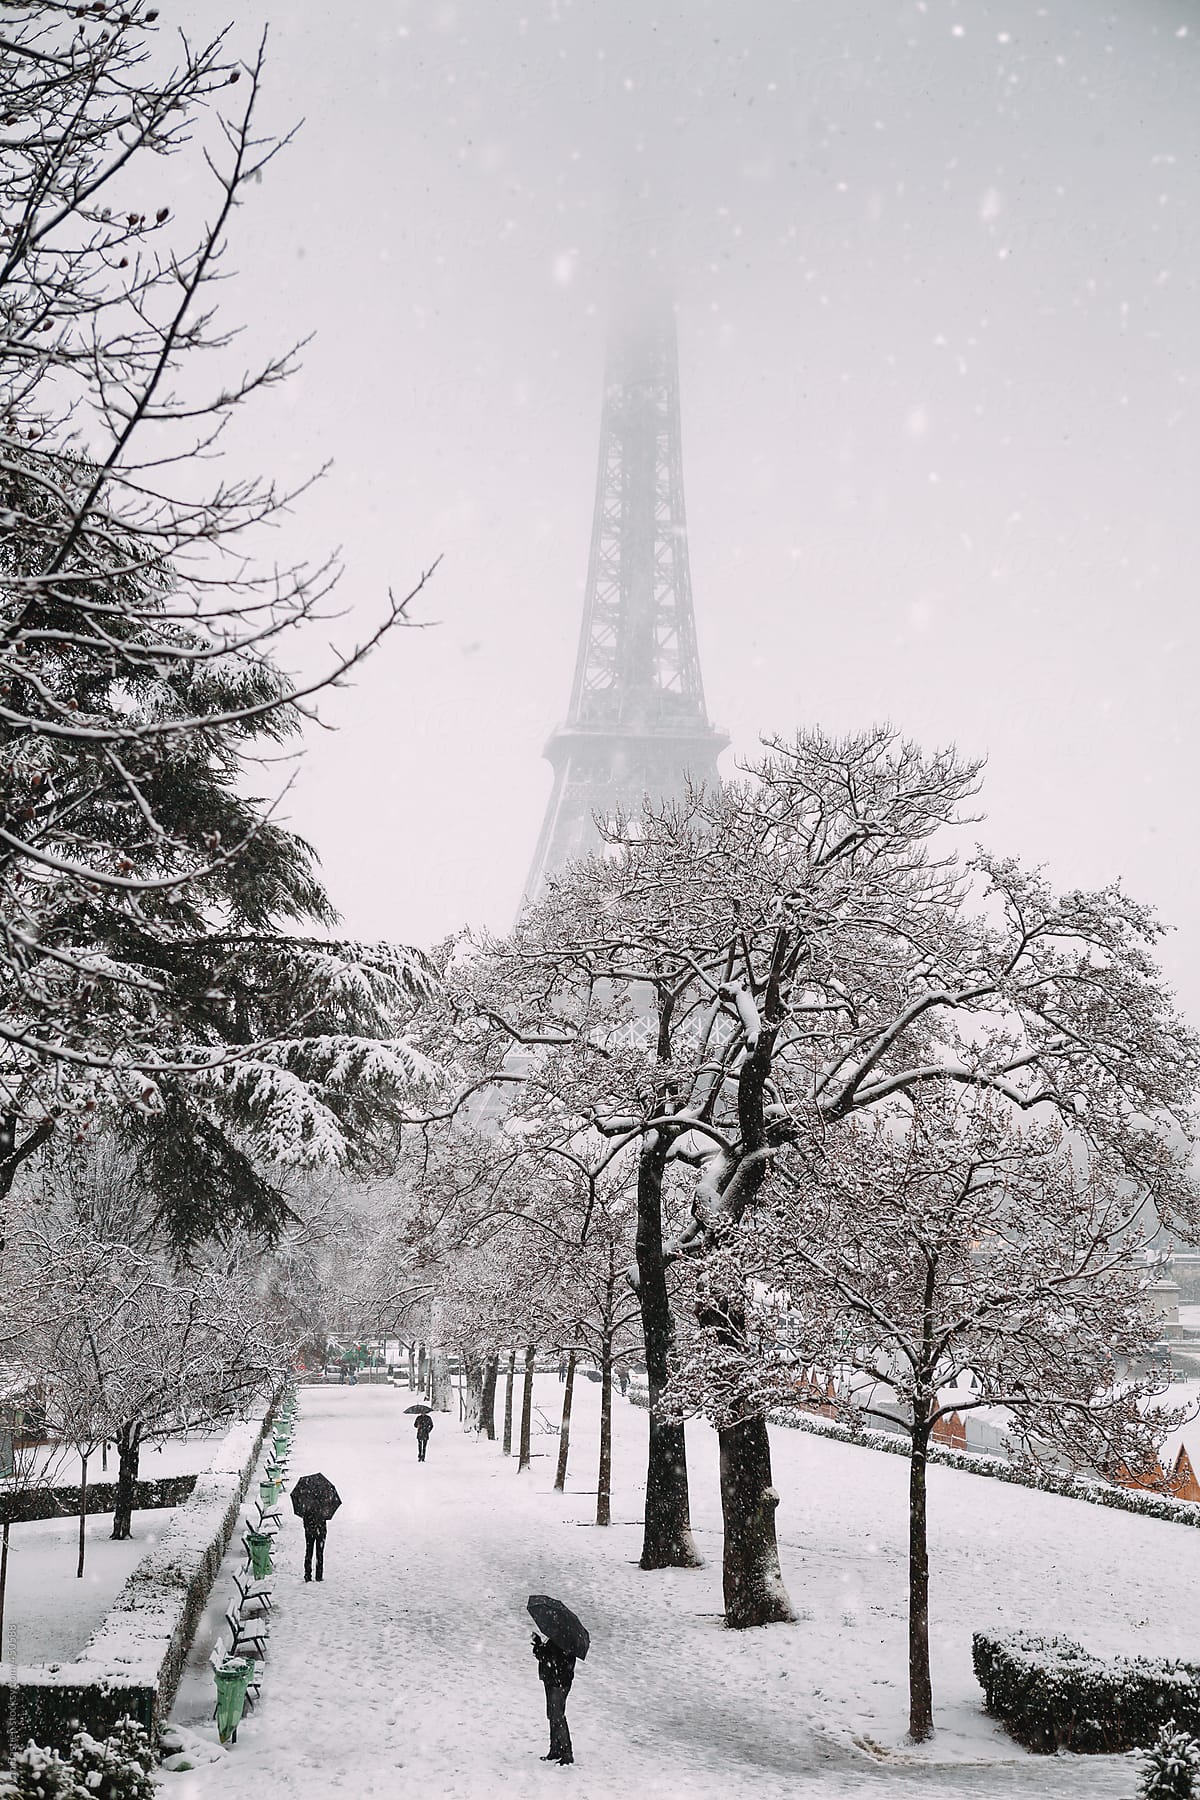 Eiffel Tower in Paris, France during a snow blizzard